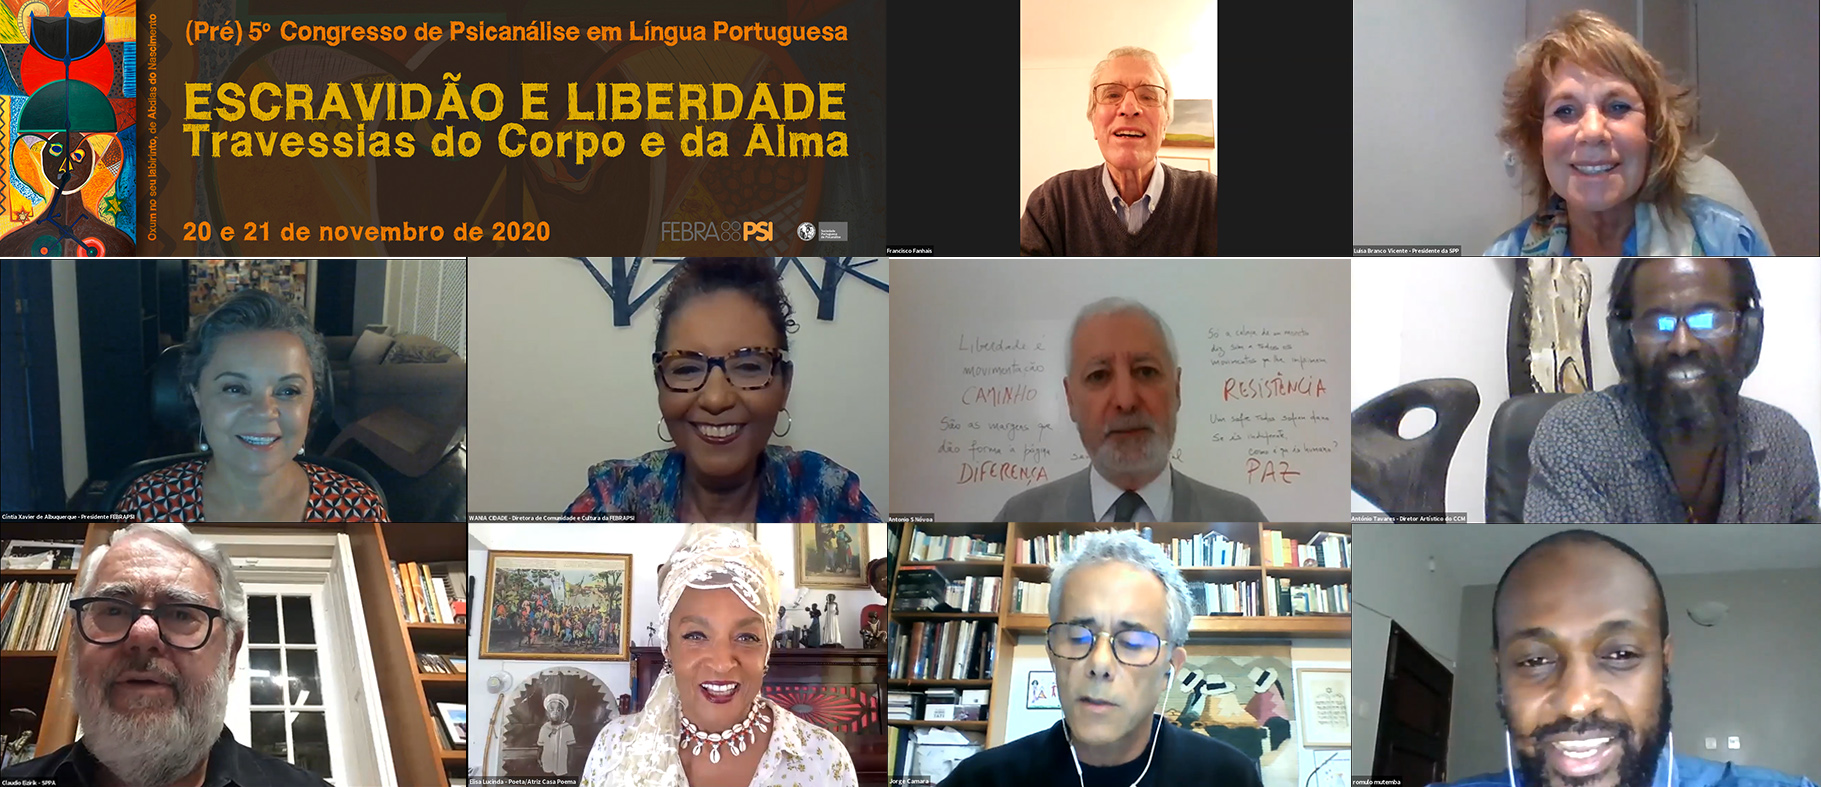 Assista o pré 5º Congresso virtual de Psicanálise em Língua Portuguesa no canal da FEBRAPSI no youtube, clique aqui